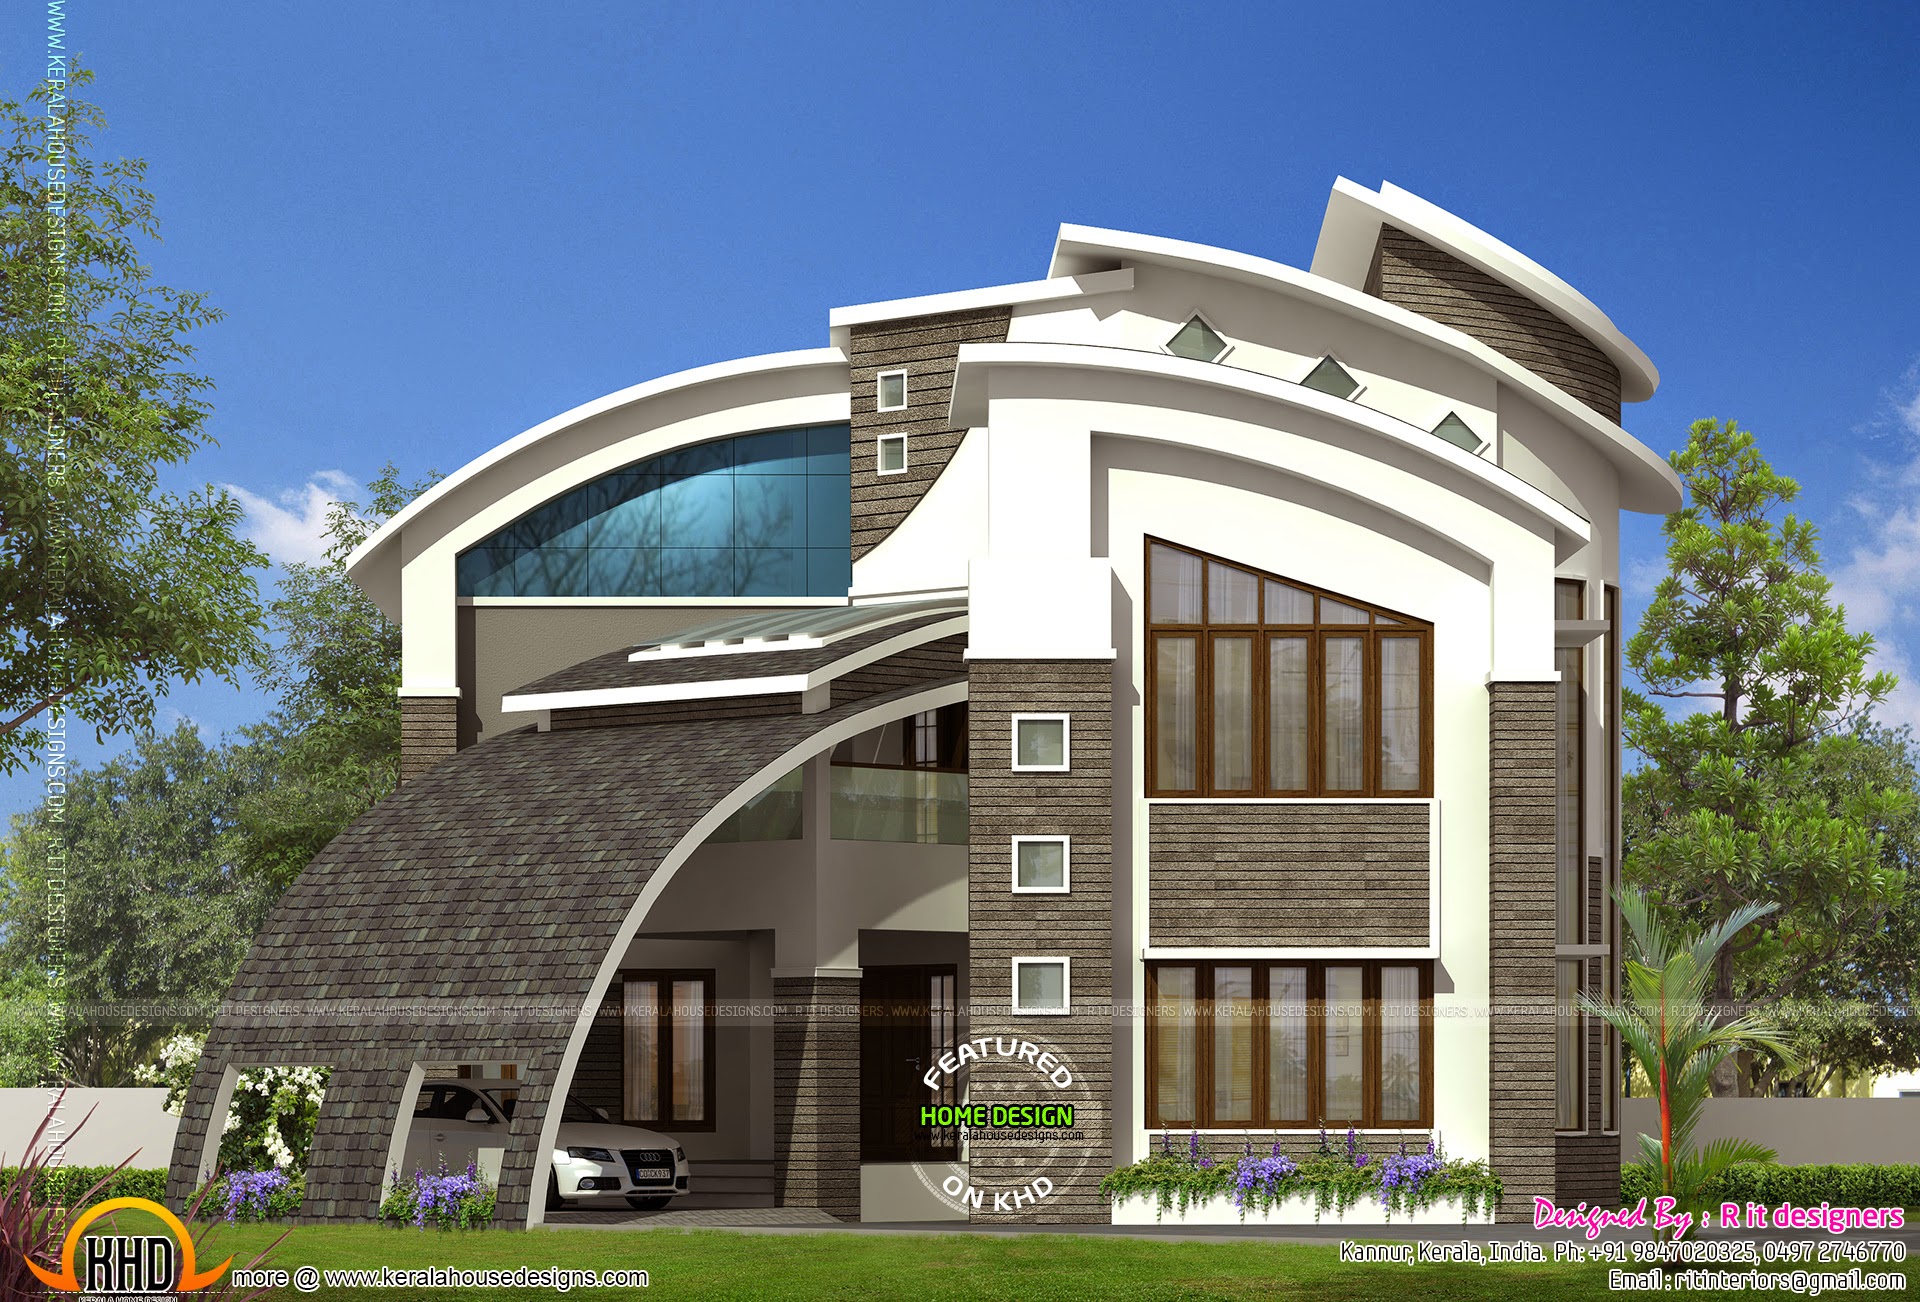  Most modern  contemporary house  design  Kerala home  design  